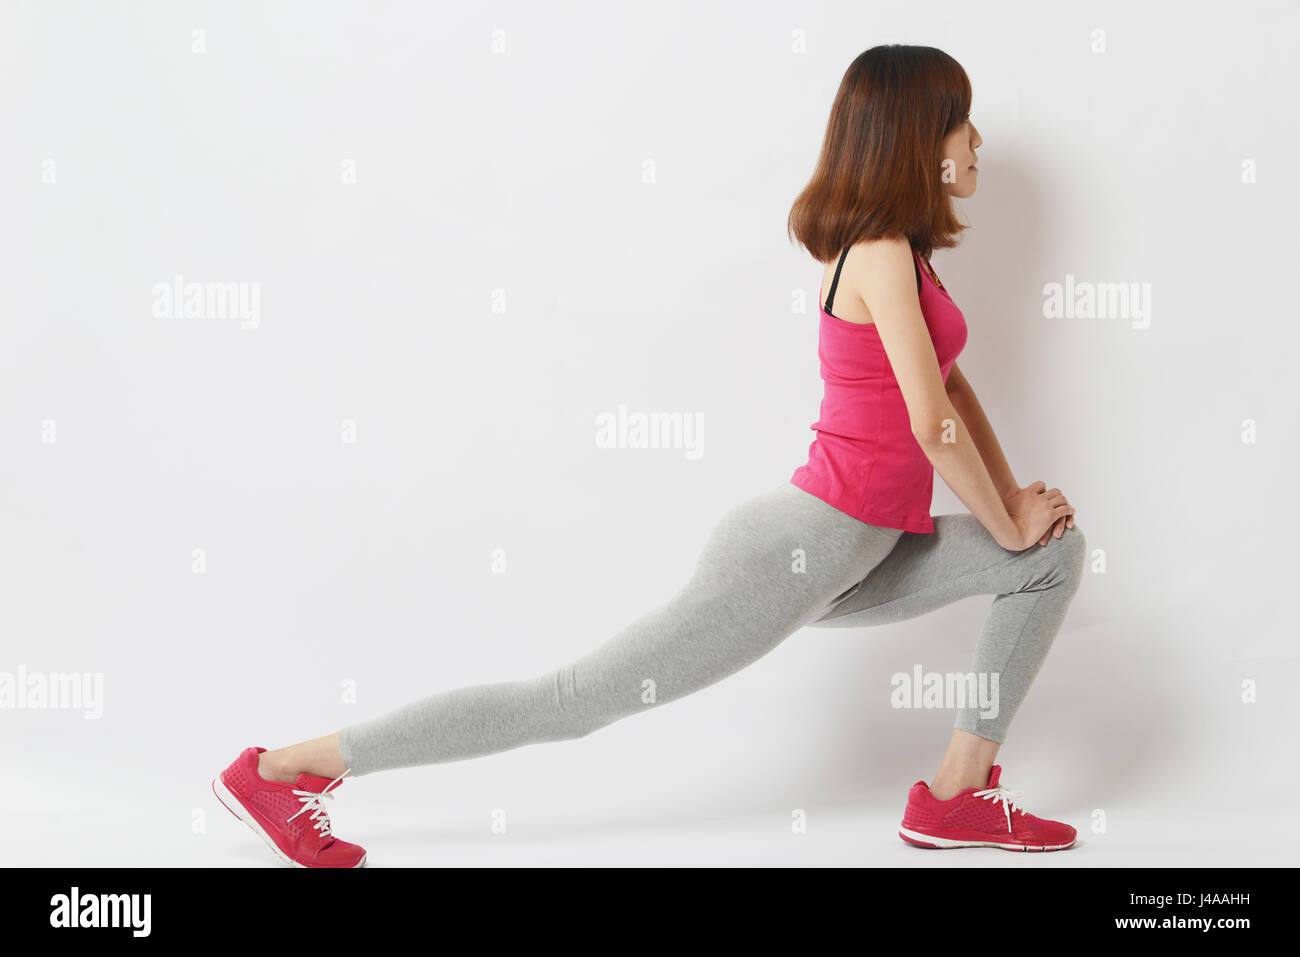 Women doing exercises aerobics warming up with gymnastics for flexibility leg stretching workout Stock Photo